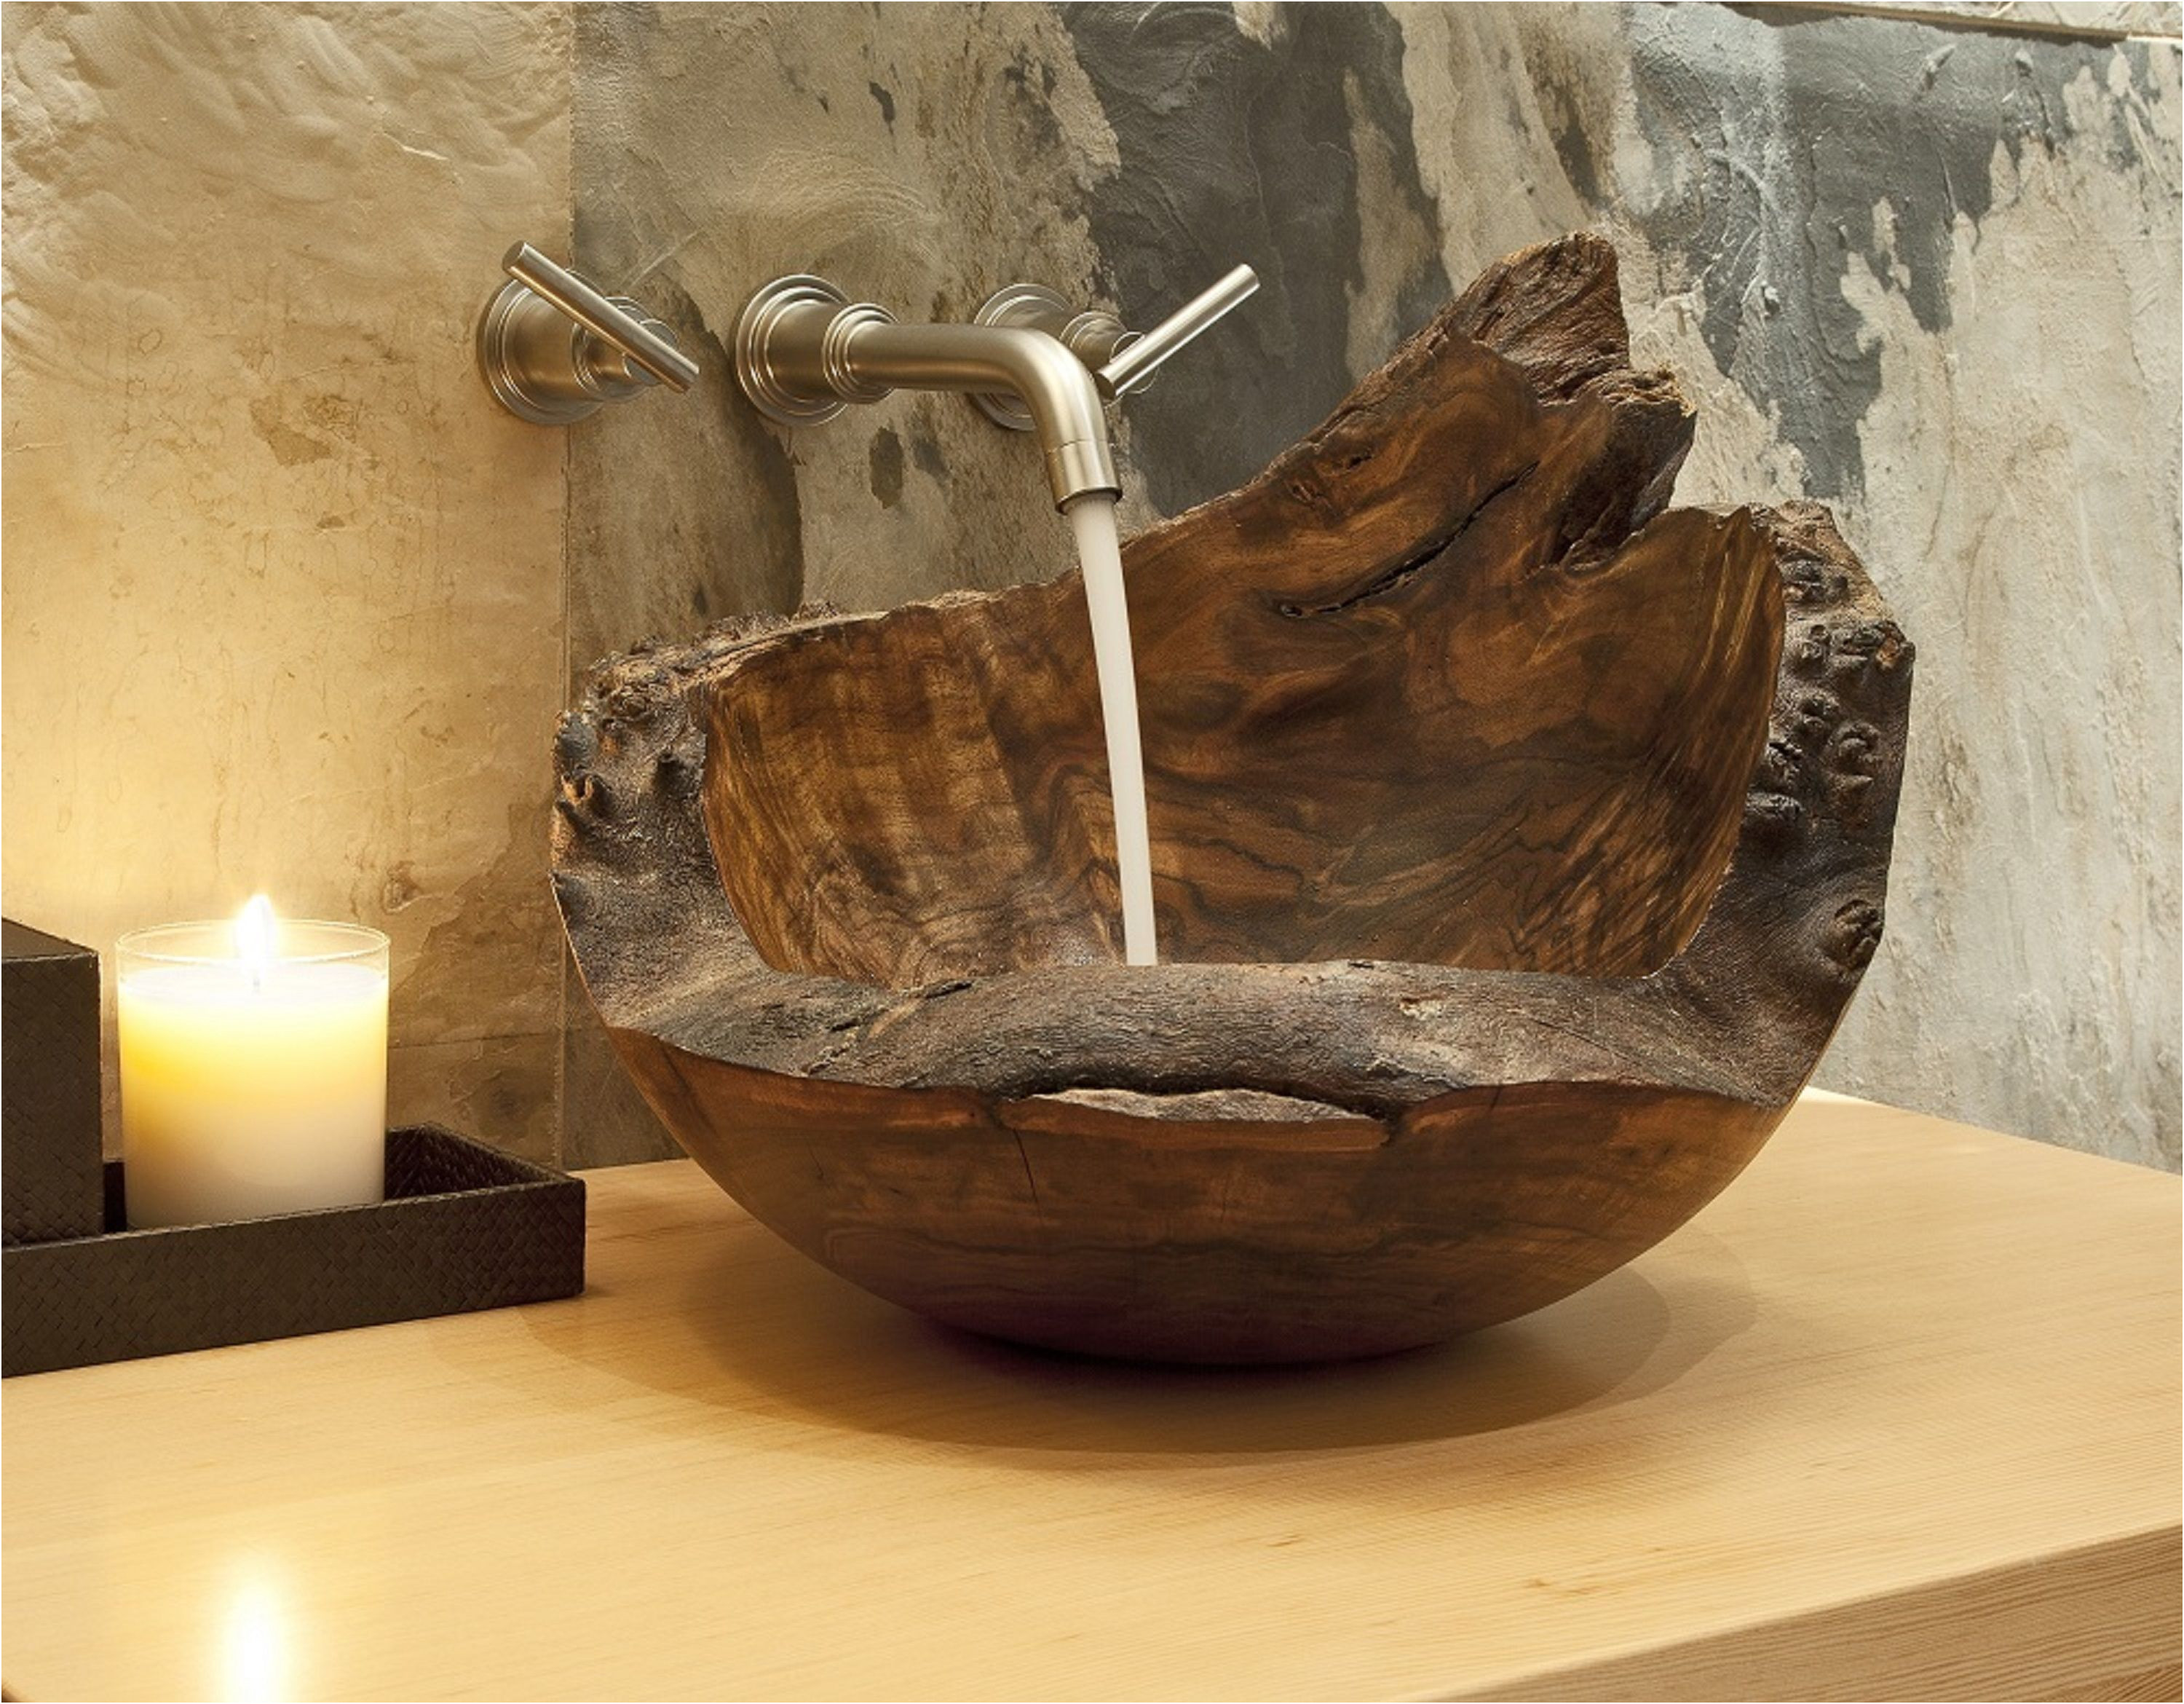 Beautiful Wooden Sinks for Bathroom